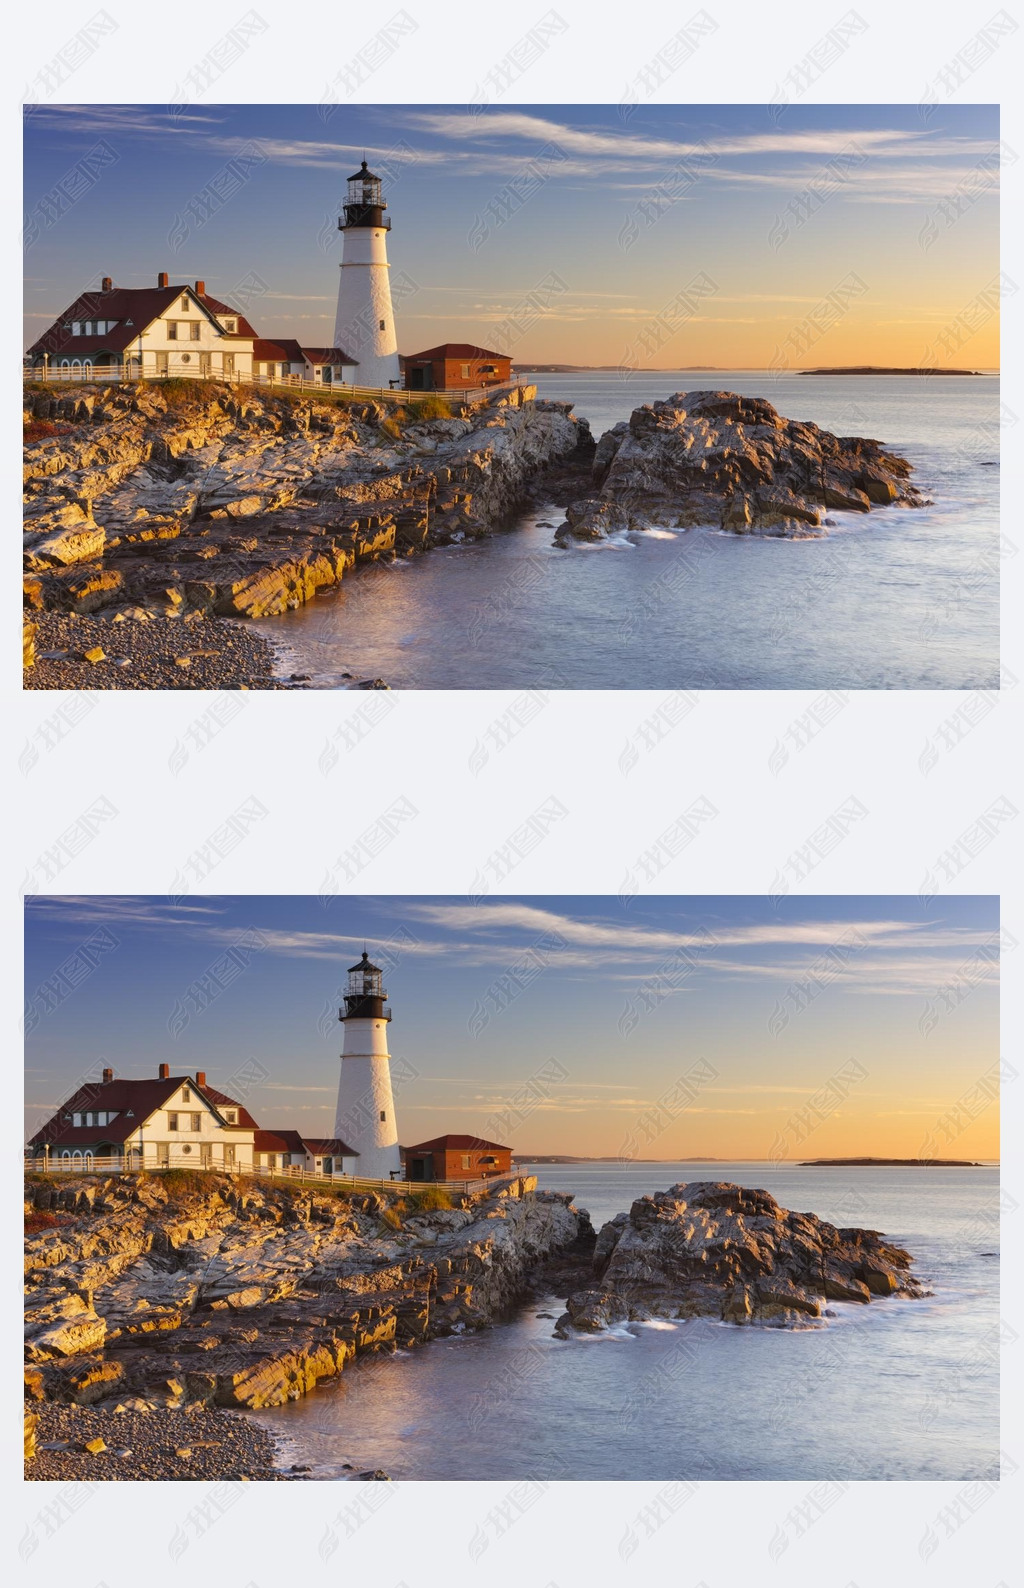 Portland Head Lighthouse, Maine, USA at sunrise